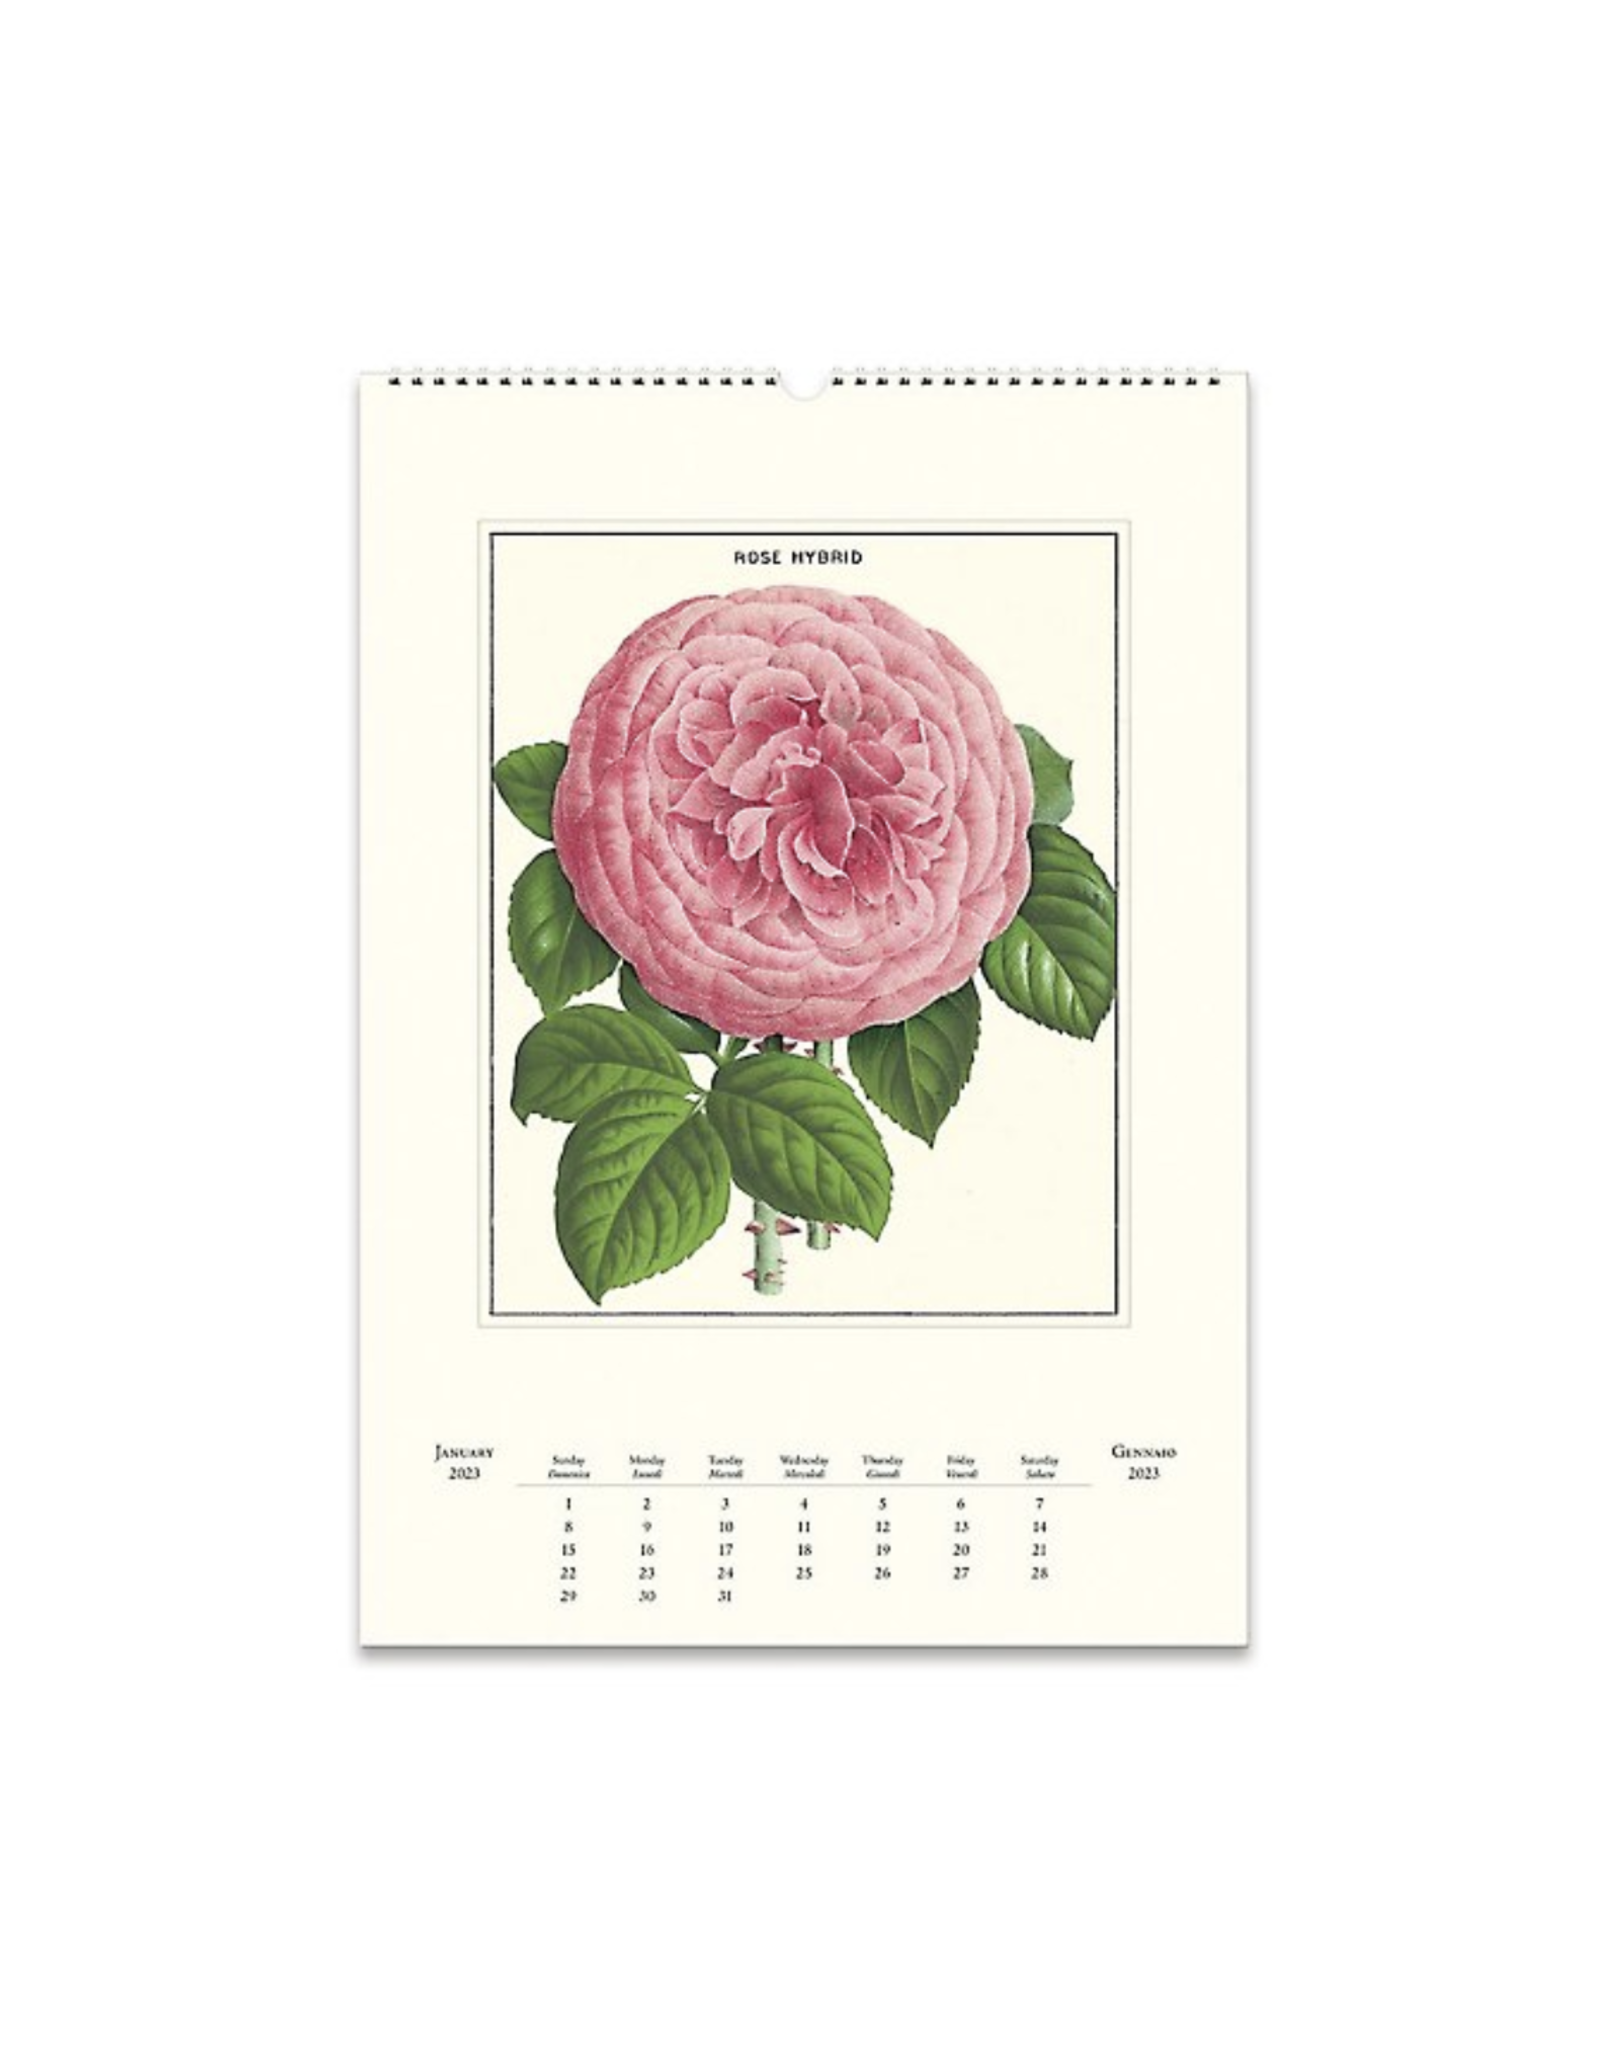 2023 Wall Calendar : Botanica